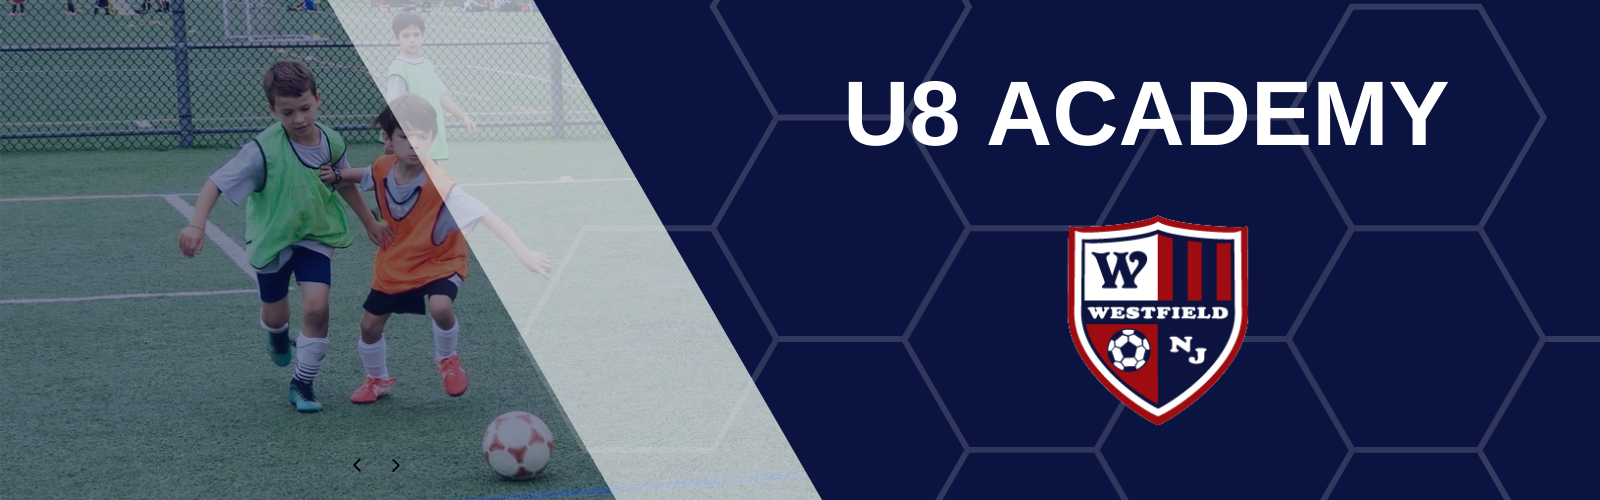 U8 Academy Banner